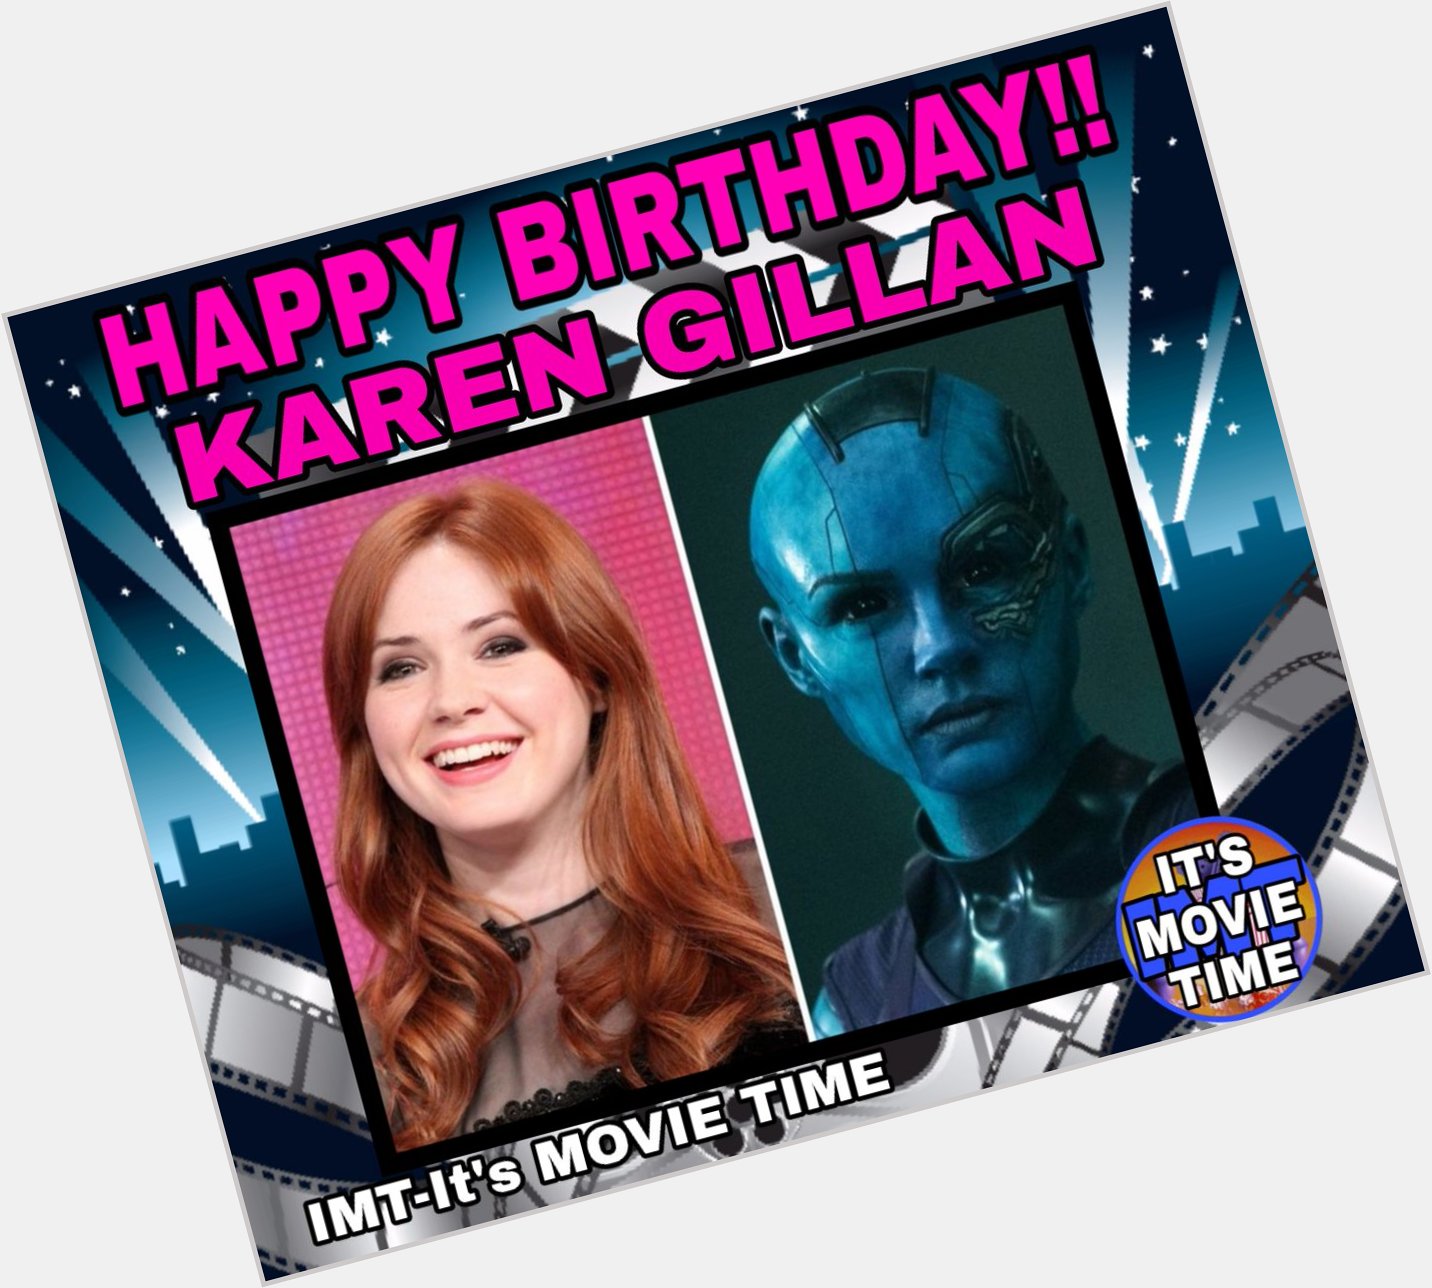 Happy Birthday to the Beautiful Karen Gillan! The actress is celebrating 32 years. 